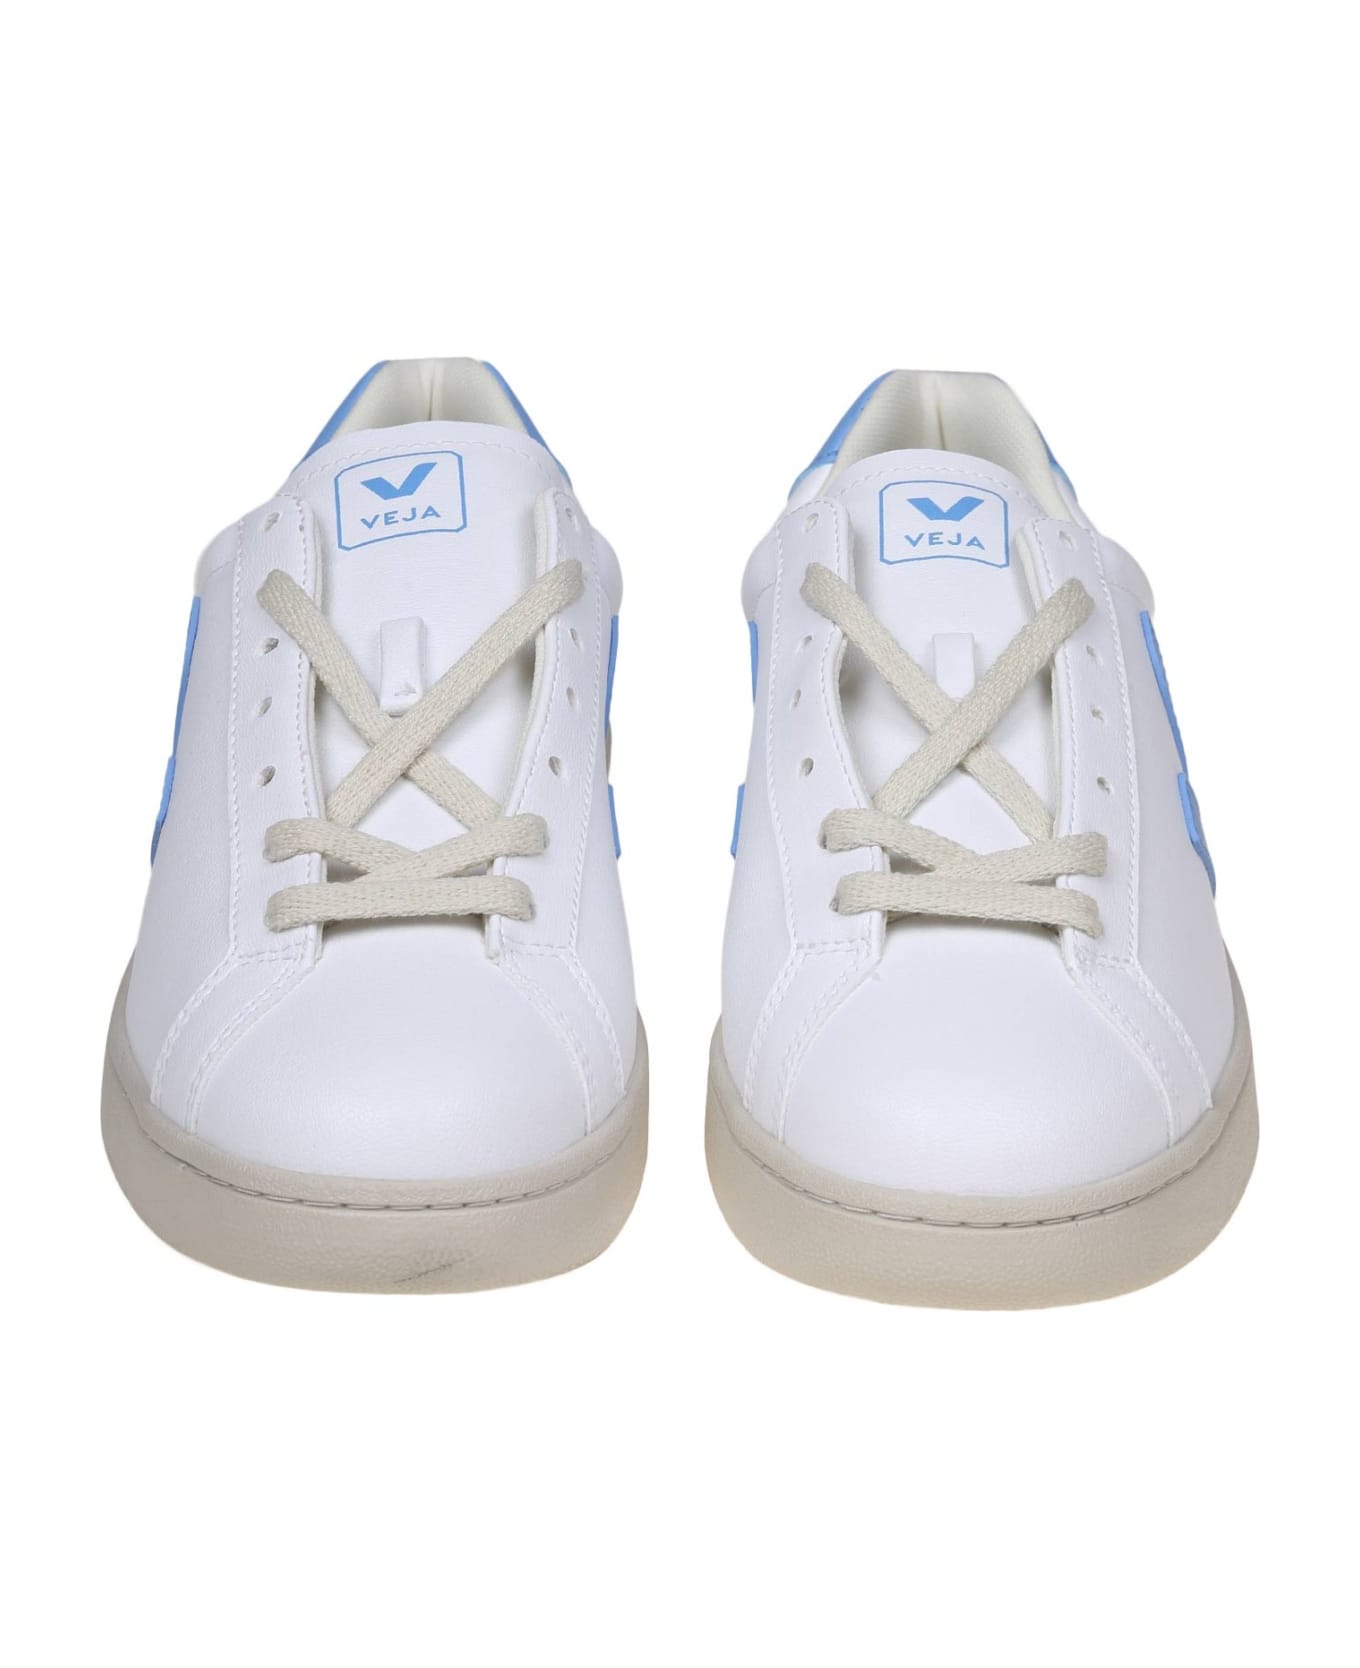 Veja Urca Sneakers In White/light Blue Coated Cotton - WHITE/LIGHT BLUE